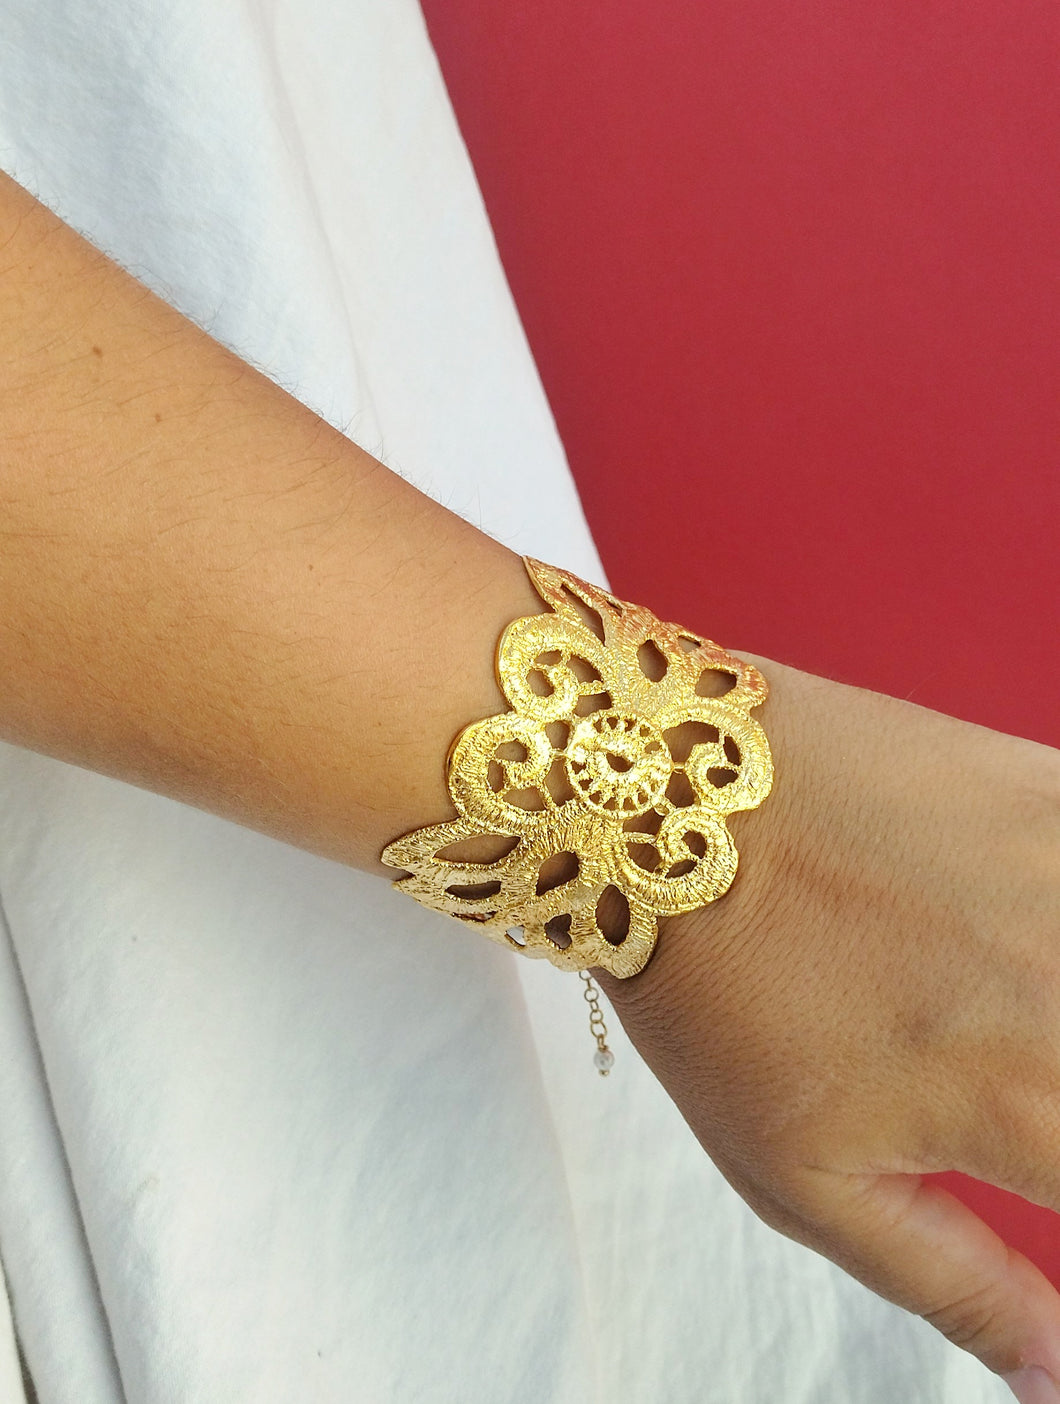 24k Gold Bracelet, Vintage Aesthetic Bangle Bracelet From Greek Folklore Needlecraft